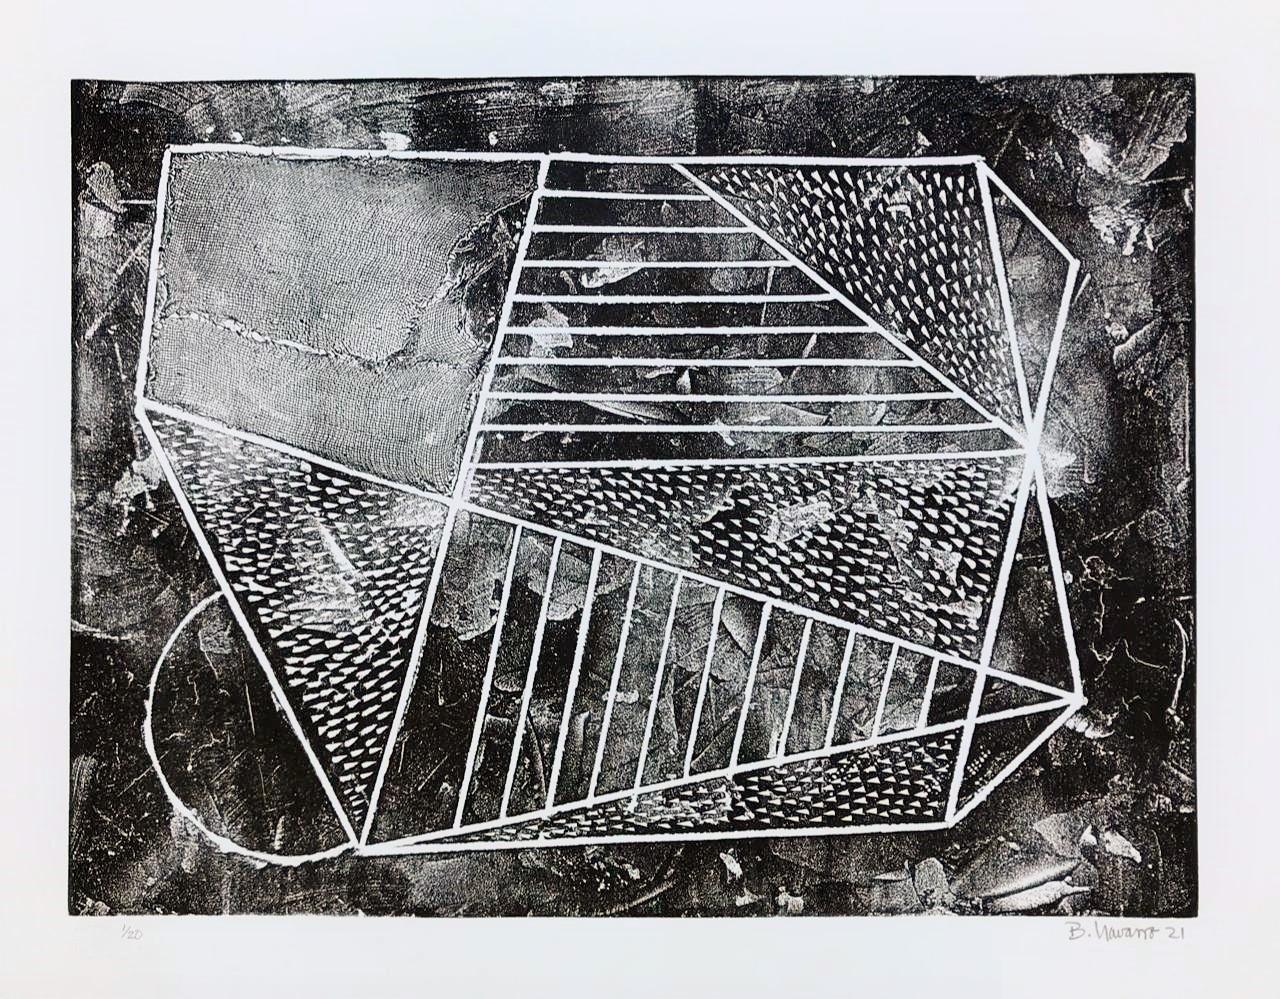 Bernardo Navarro Tomas (Cuba, 1977)
'Untitled (B/N horizontal)', 2021
collagraph on paper Guarro Biblos 250g.
21.1 x 27.2 in. (53.5 x 69 cm.)
Edition of 20
ID: NAA-111
Unframed